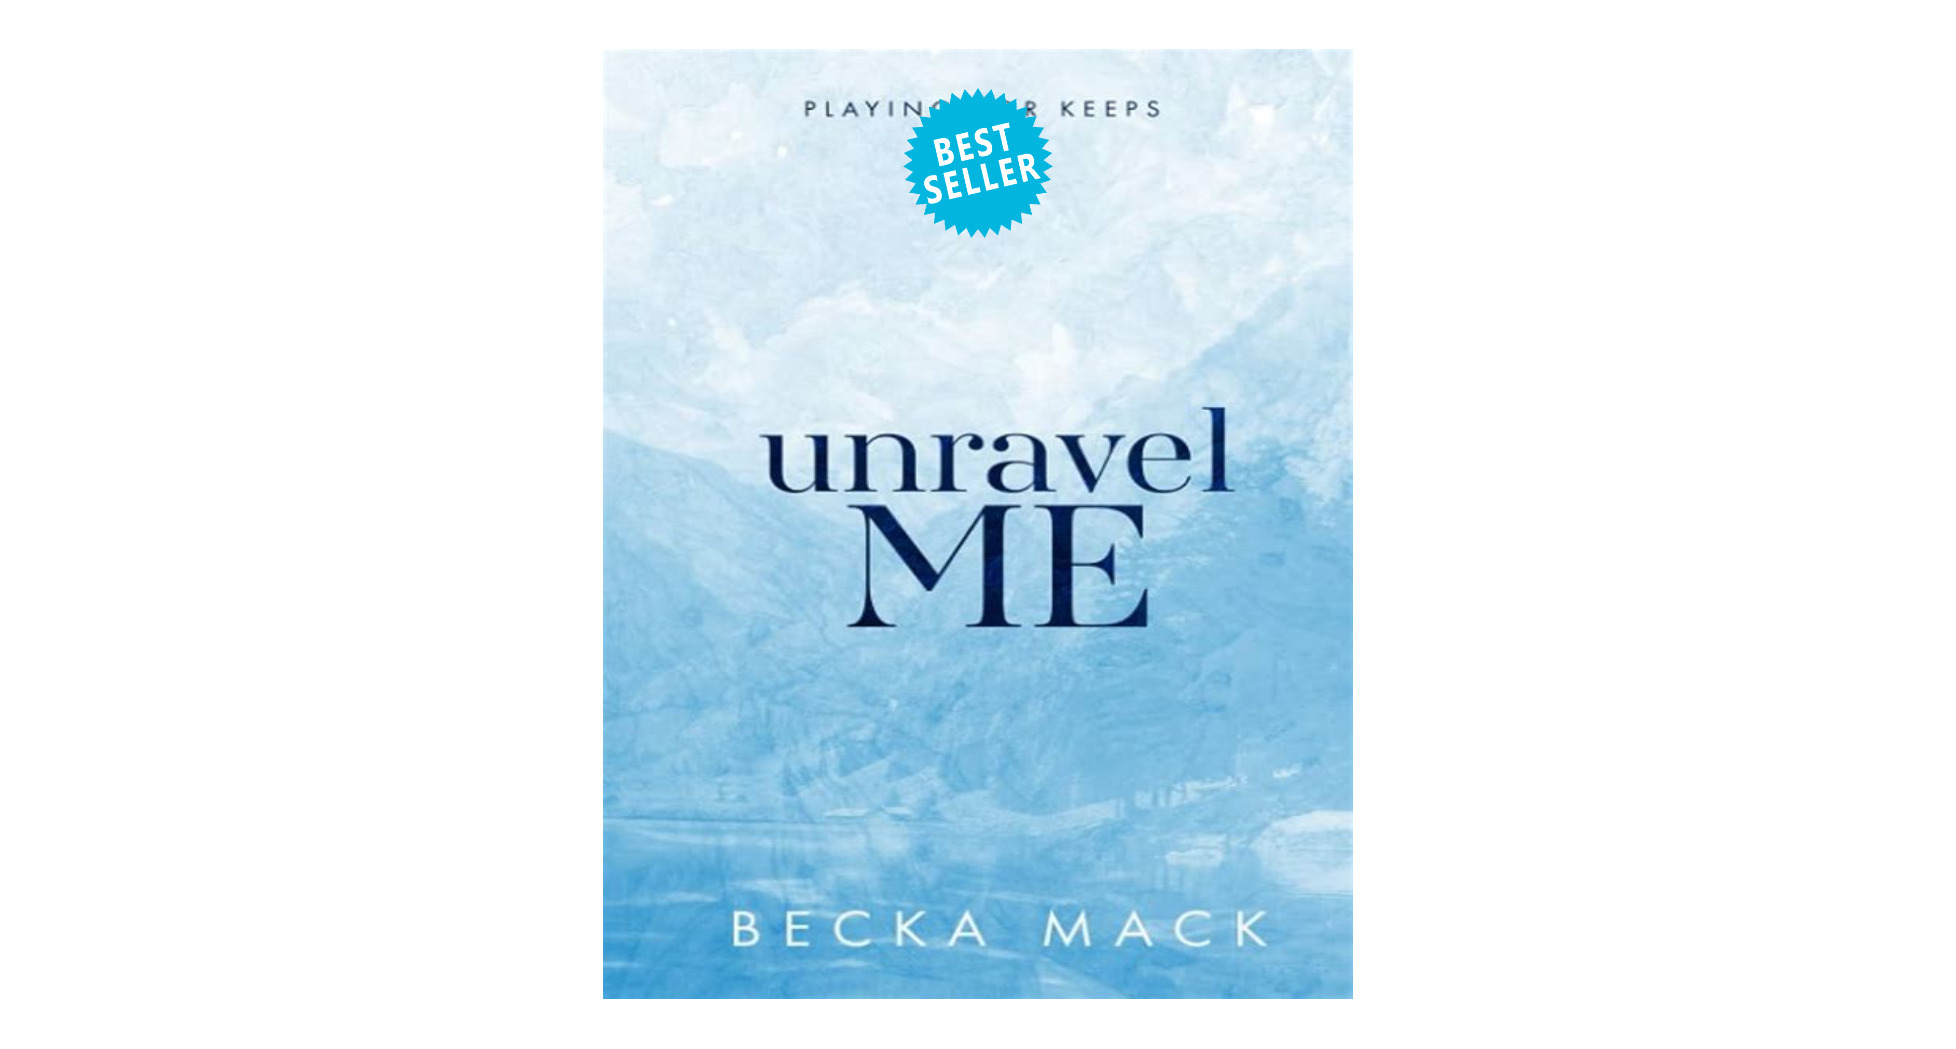 (Get) [PDF/EPUB] Unravel Me (Playing for Keeps, #3) by Becka Mack Full Page_e0460856_08530800.jpg